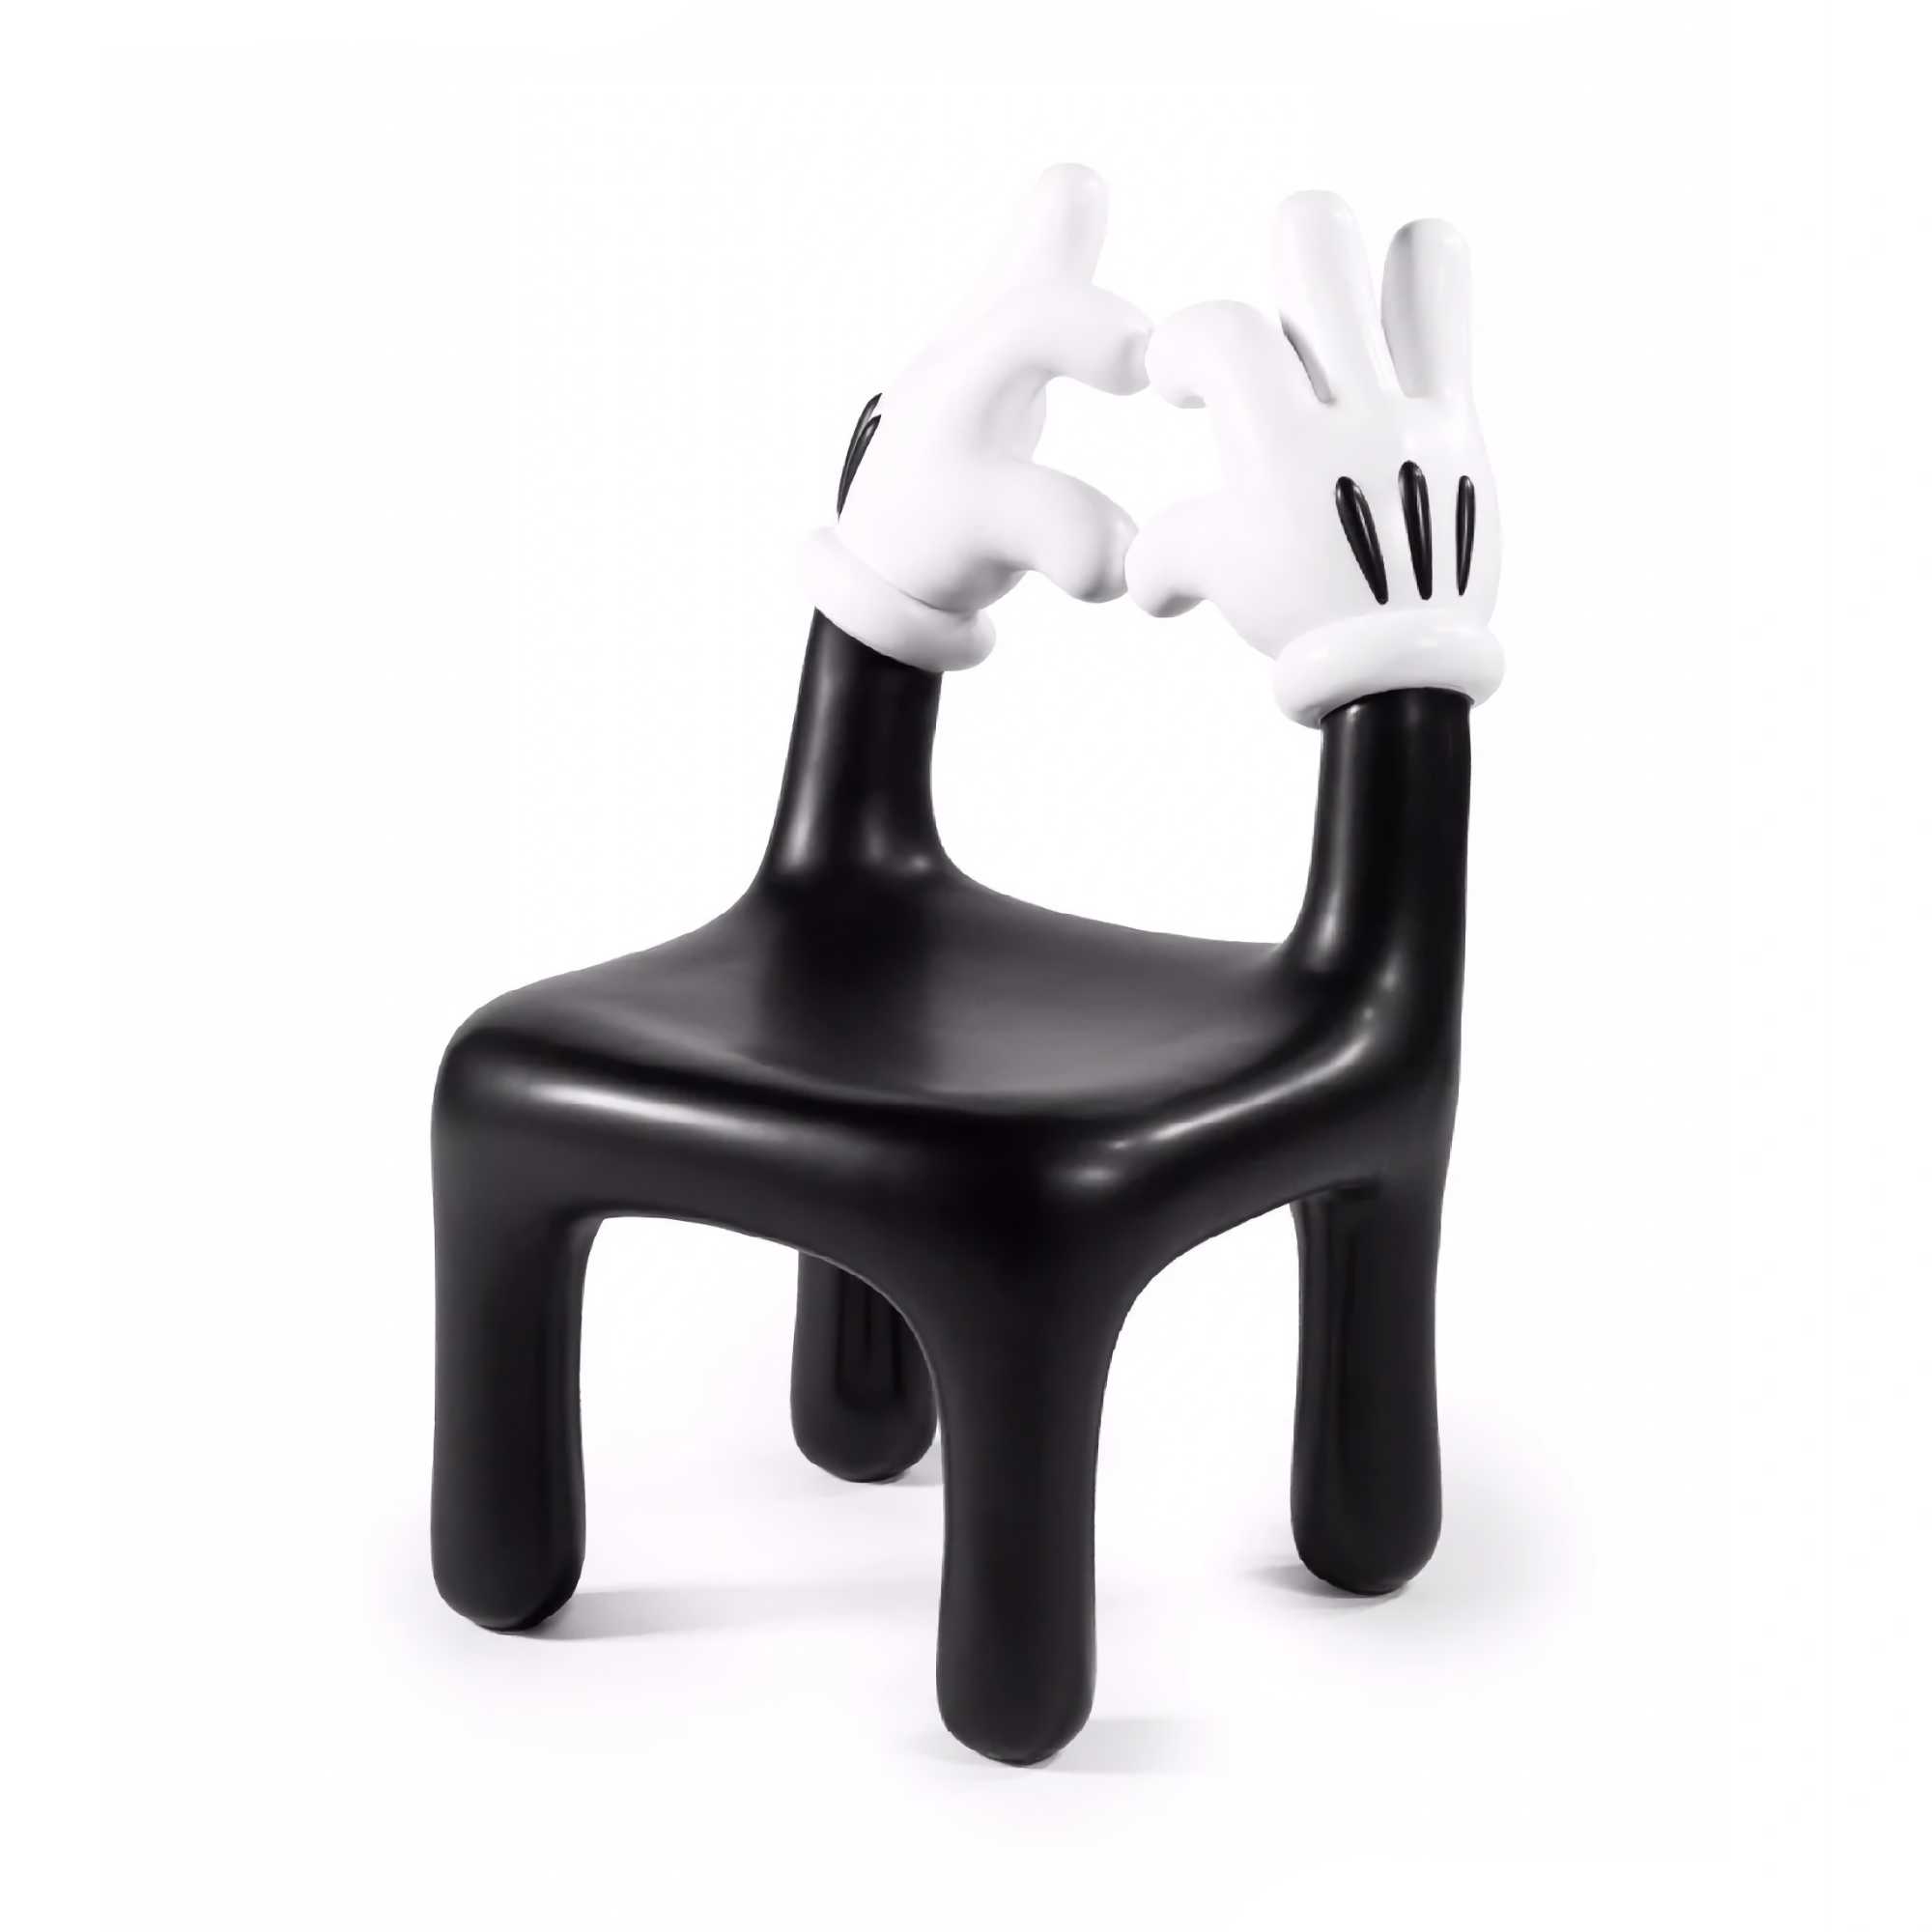 Sunday Home Studio Cardia Hands Chair